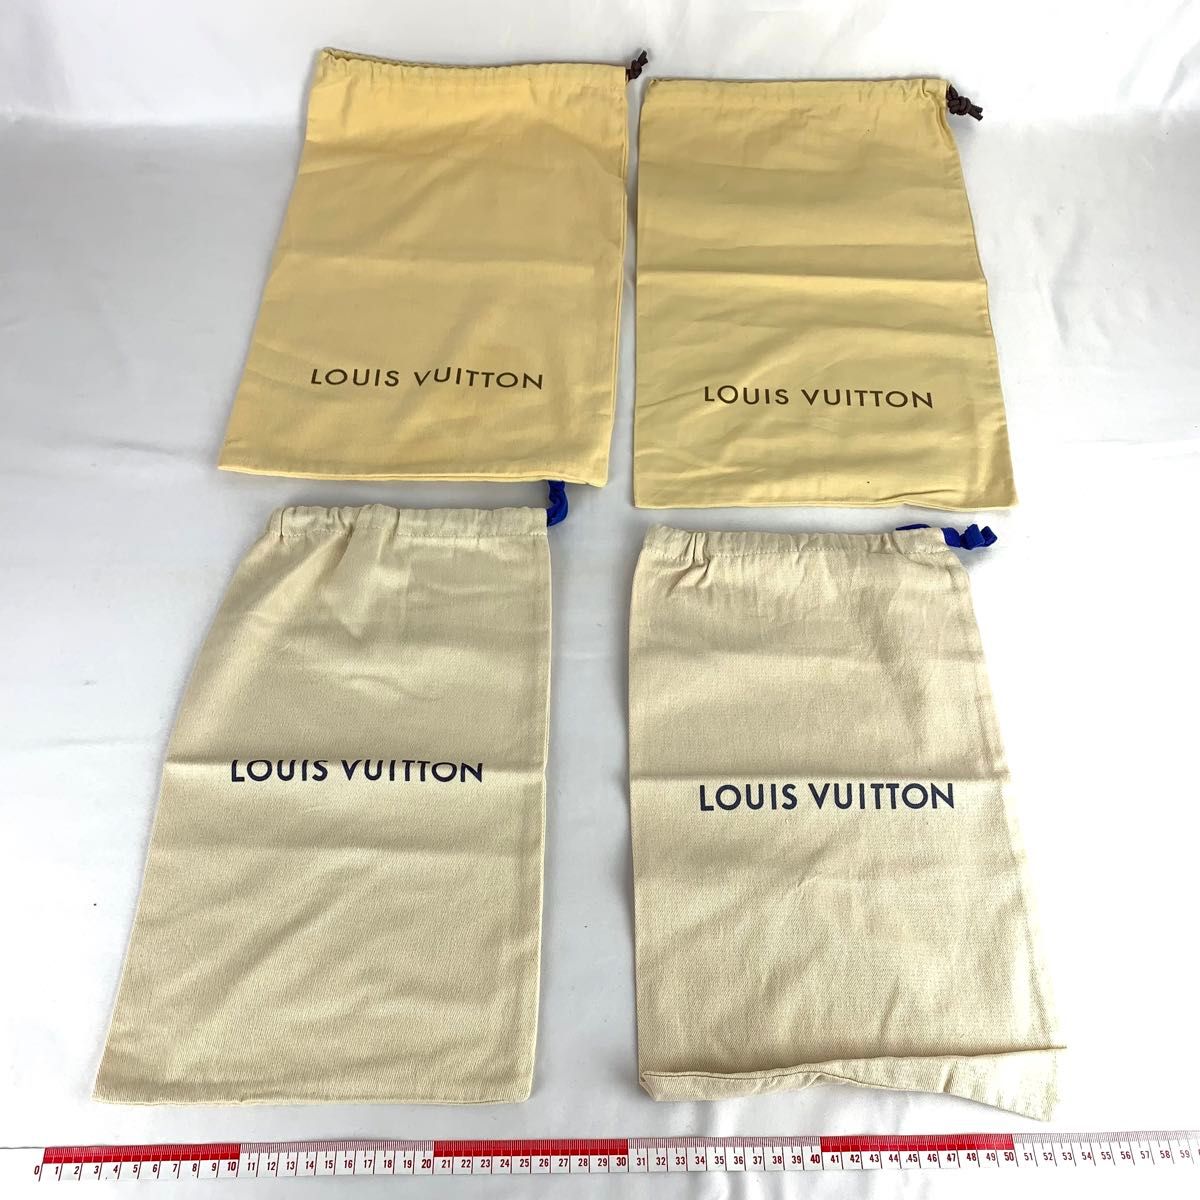 LOUIS VUITTON ルイヴィトン 保存袋 20枚 セット 布袋 保管袋 大型 中型 巾着袋